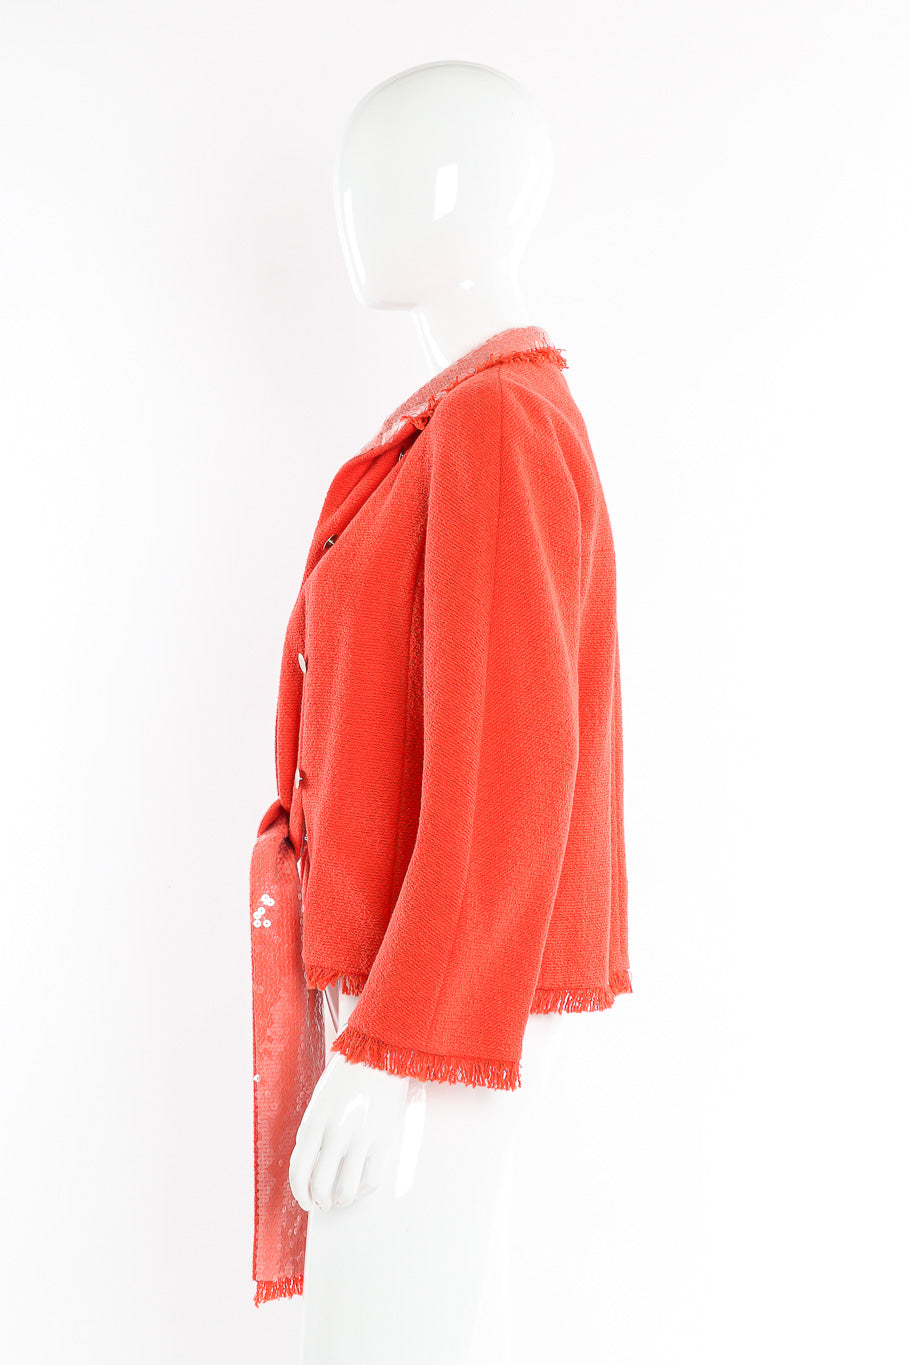 Bouclé tweed knit jacket by Chanel on mannequin side @recessla